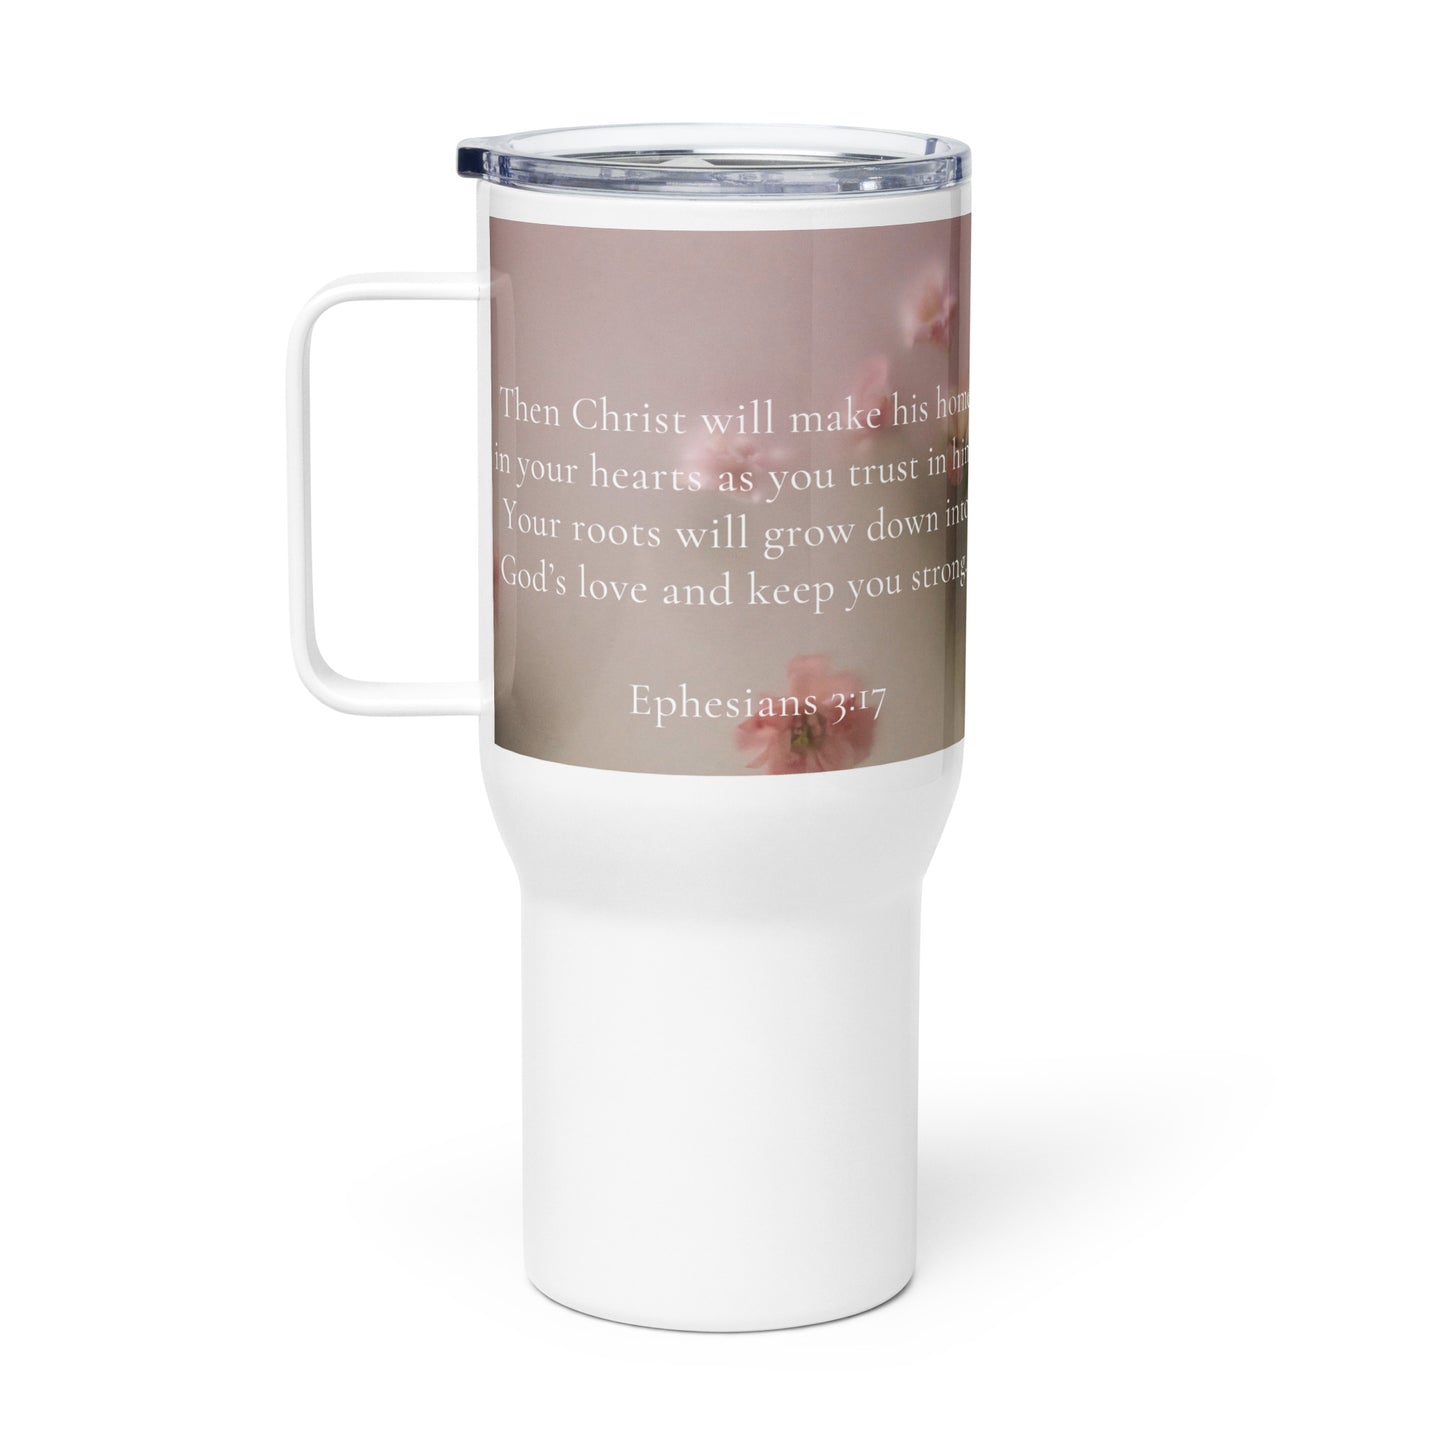 Ephesians 3:17 Travel mug with a handle